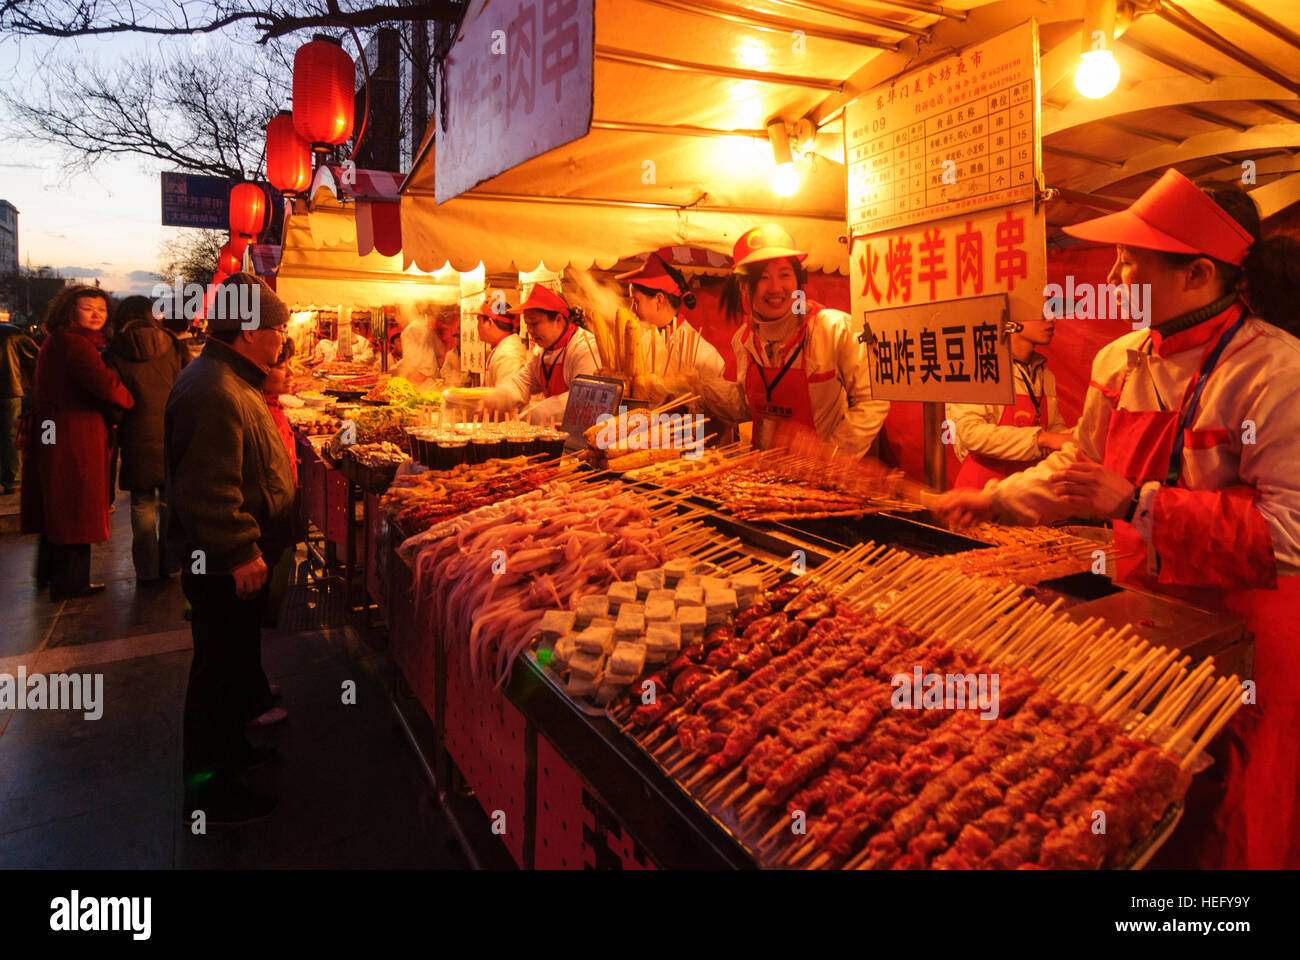 Peking: Donghuamen night market, Beijing, China Stock Photo